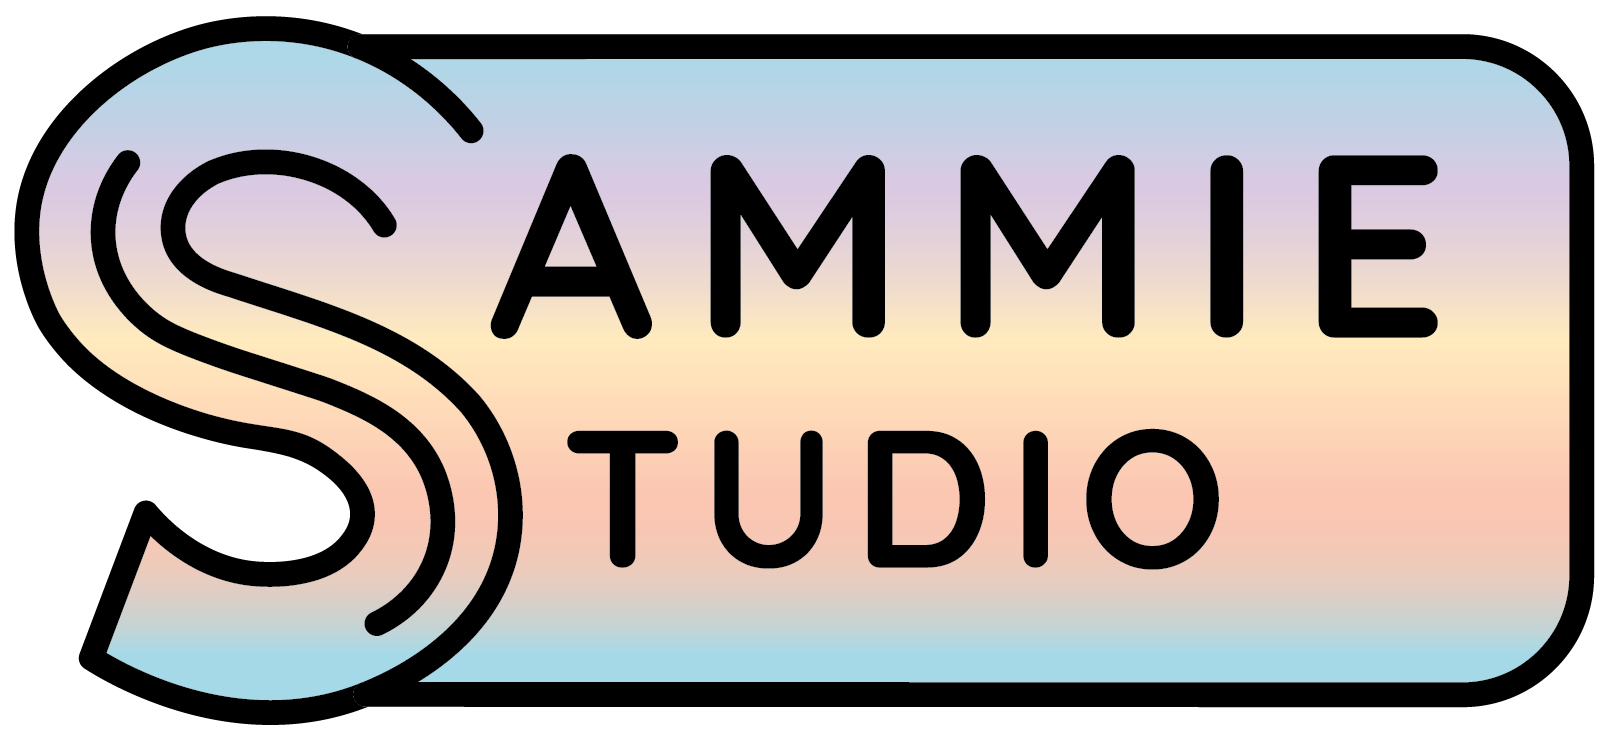 Sammie Studio